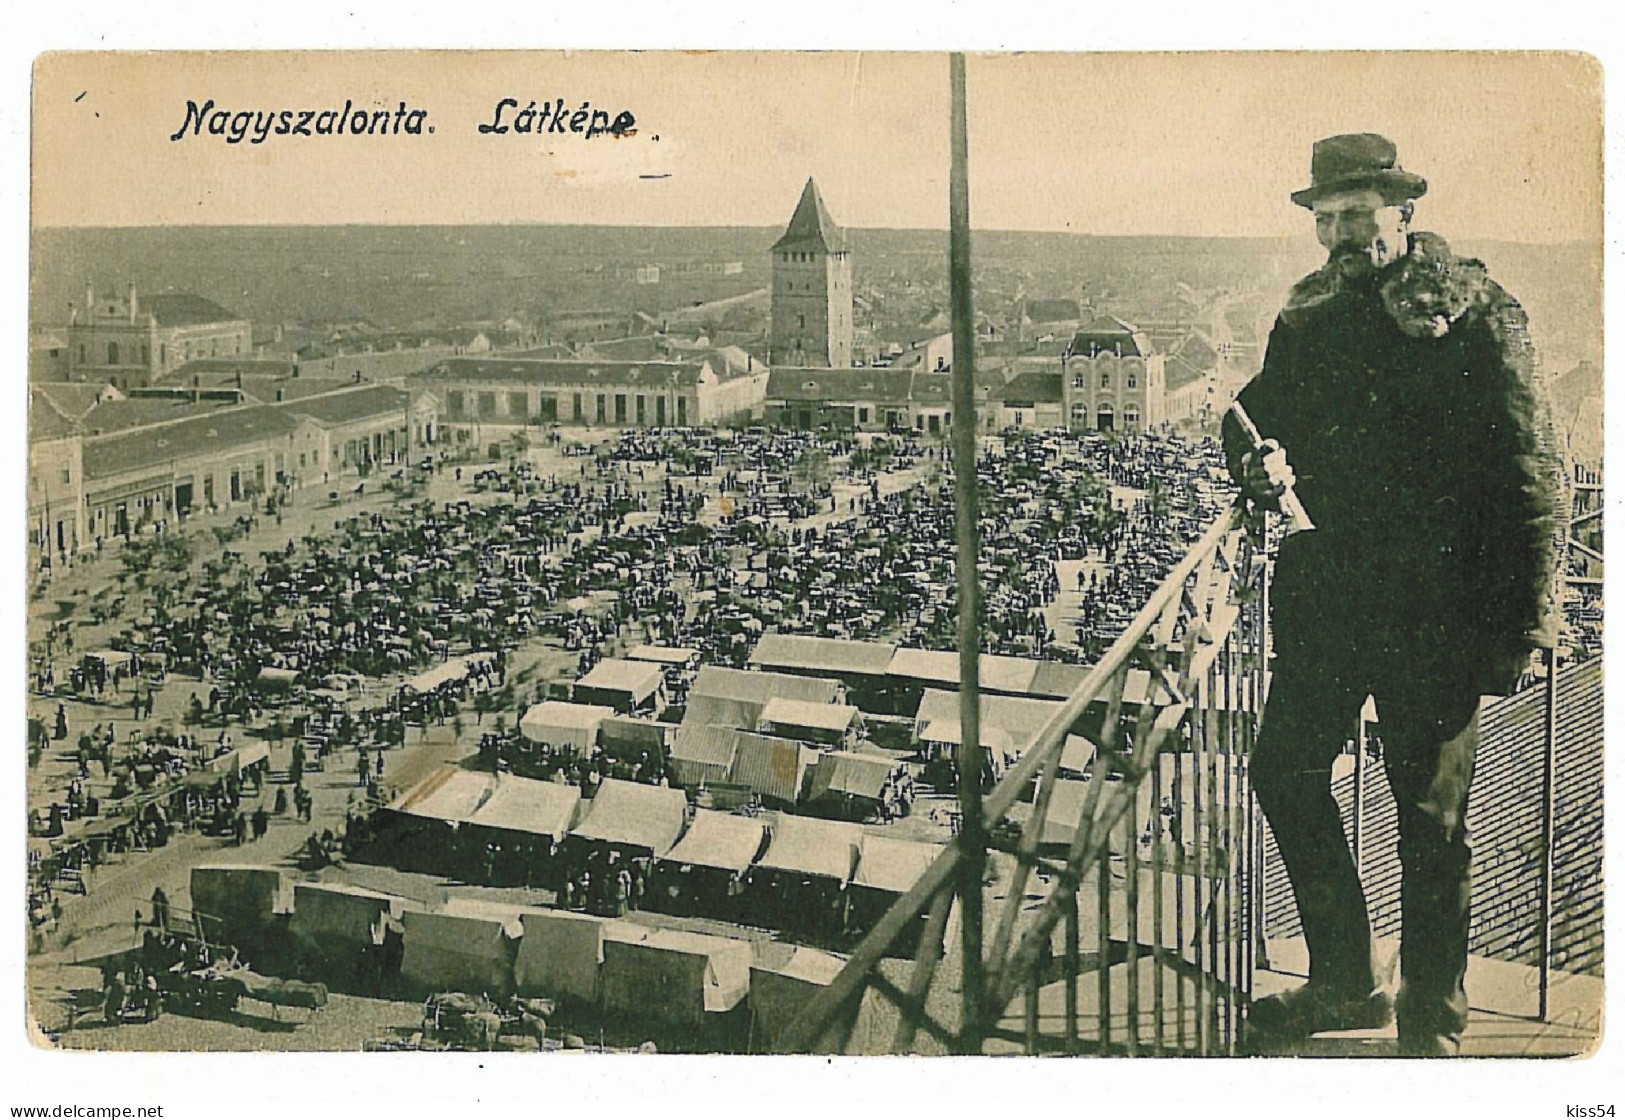 RO 82 - 2003 SALONTA, Synagogue On Left, Market, Romania - Old Postcard - Used - 1914 - Romania